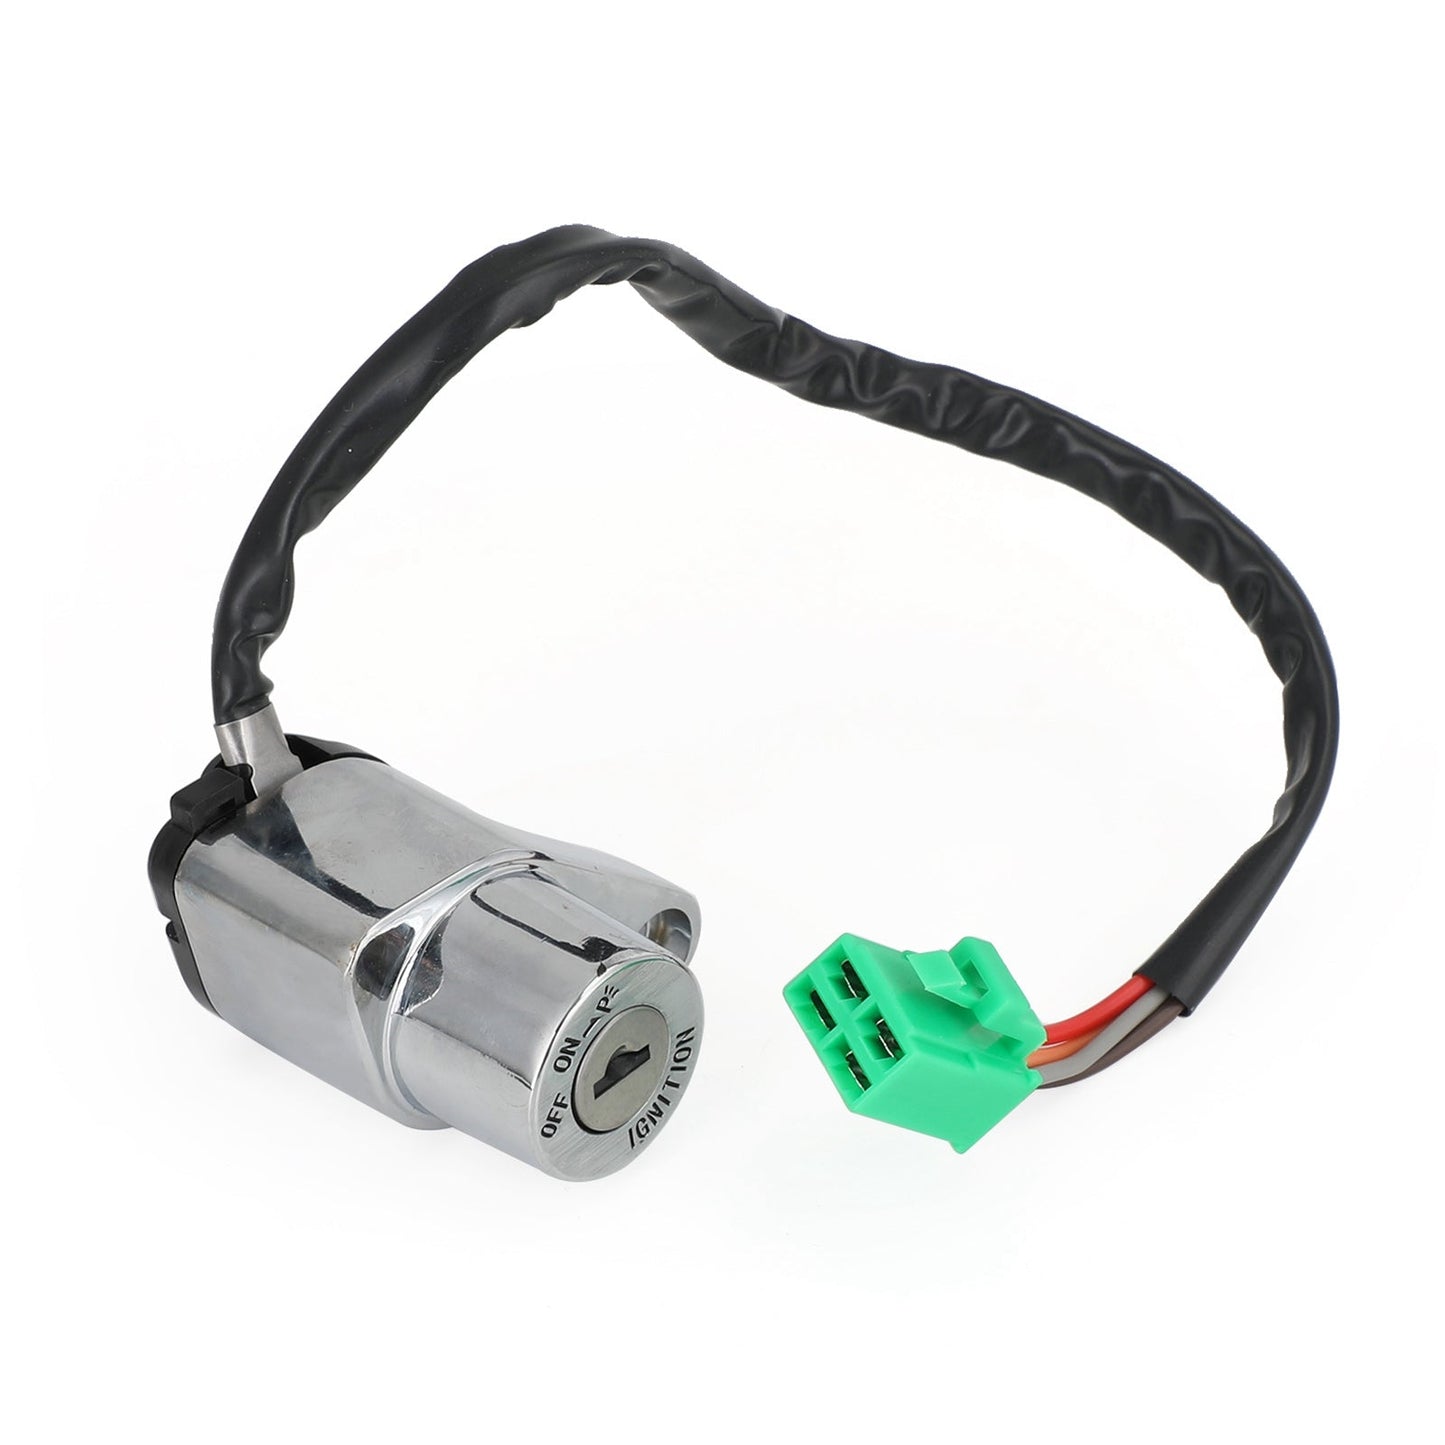 Ignition Switch Fuel Gas Cap Keys for Suzuki Intruder VS700 VS750 VS800 VS1400